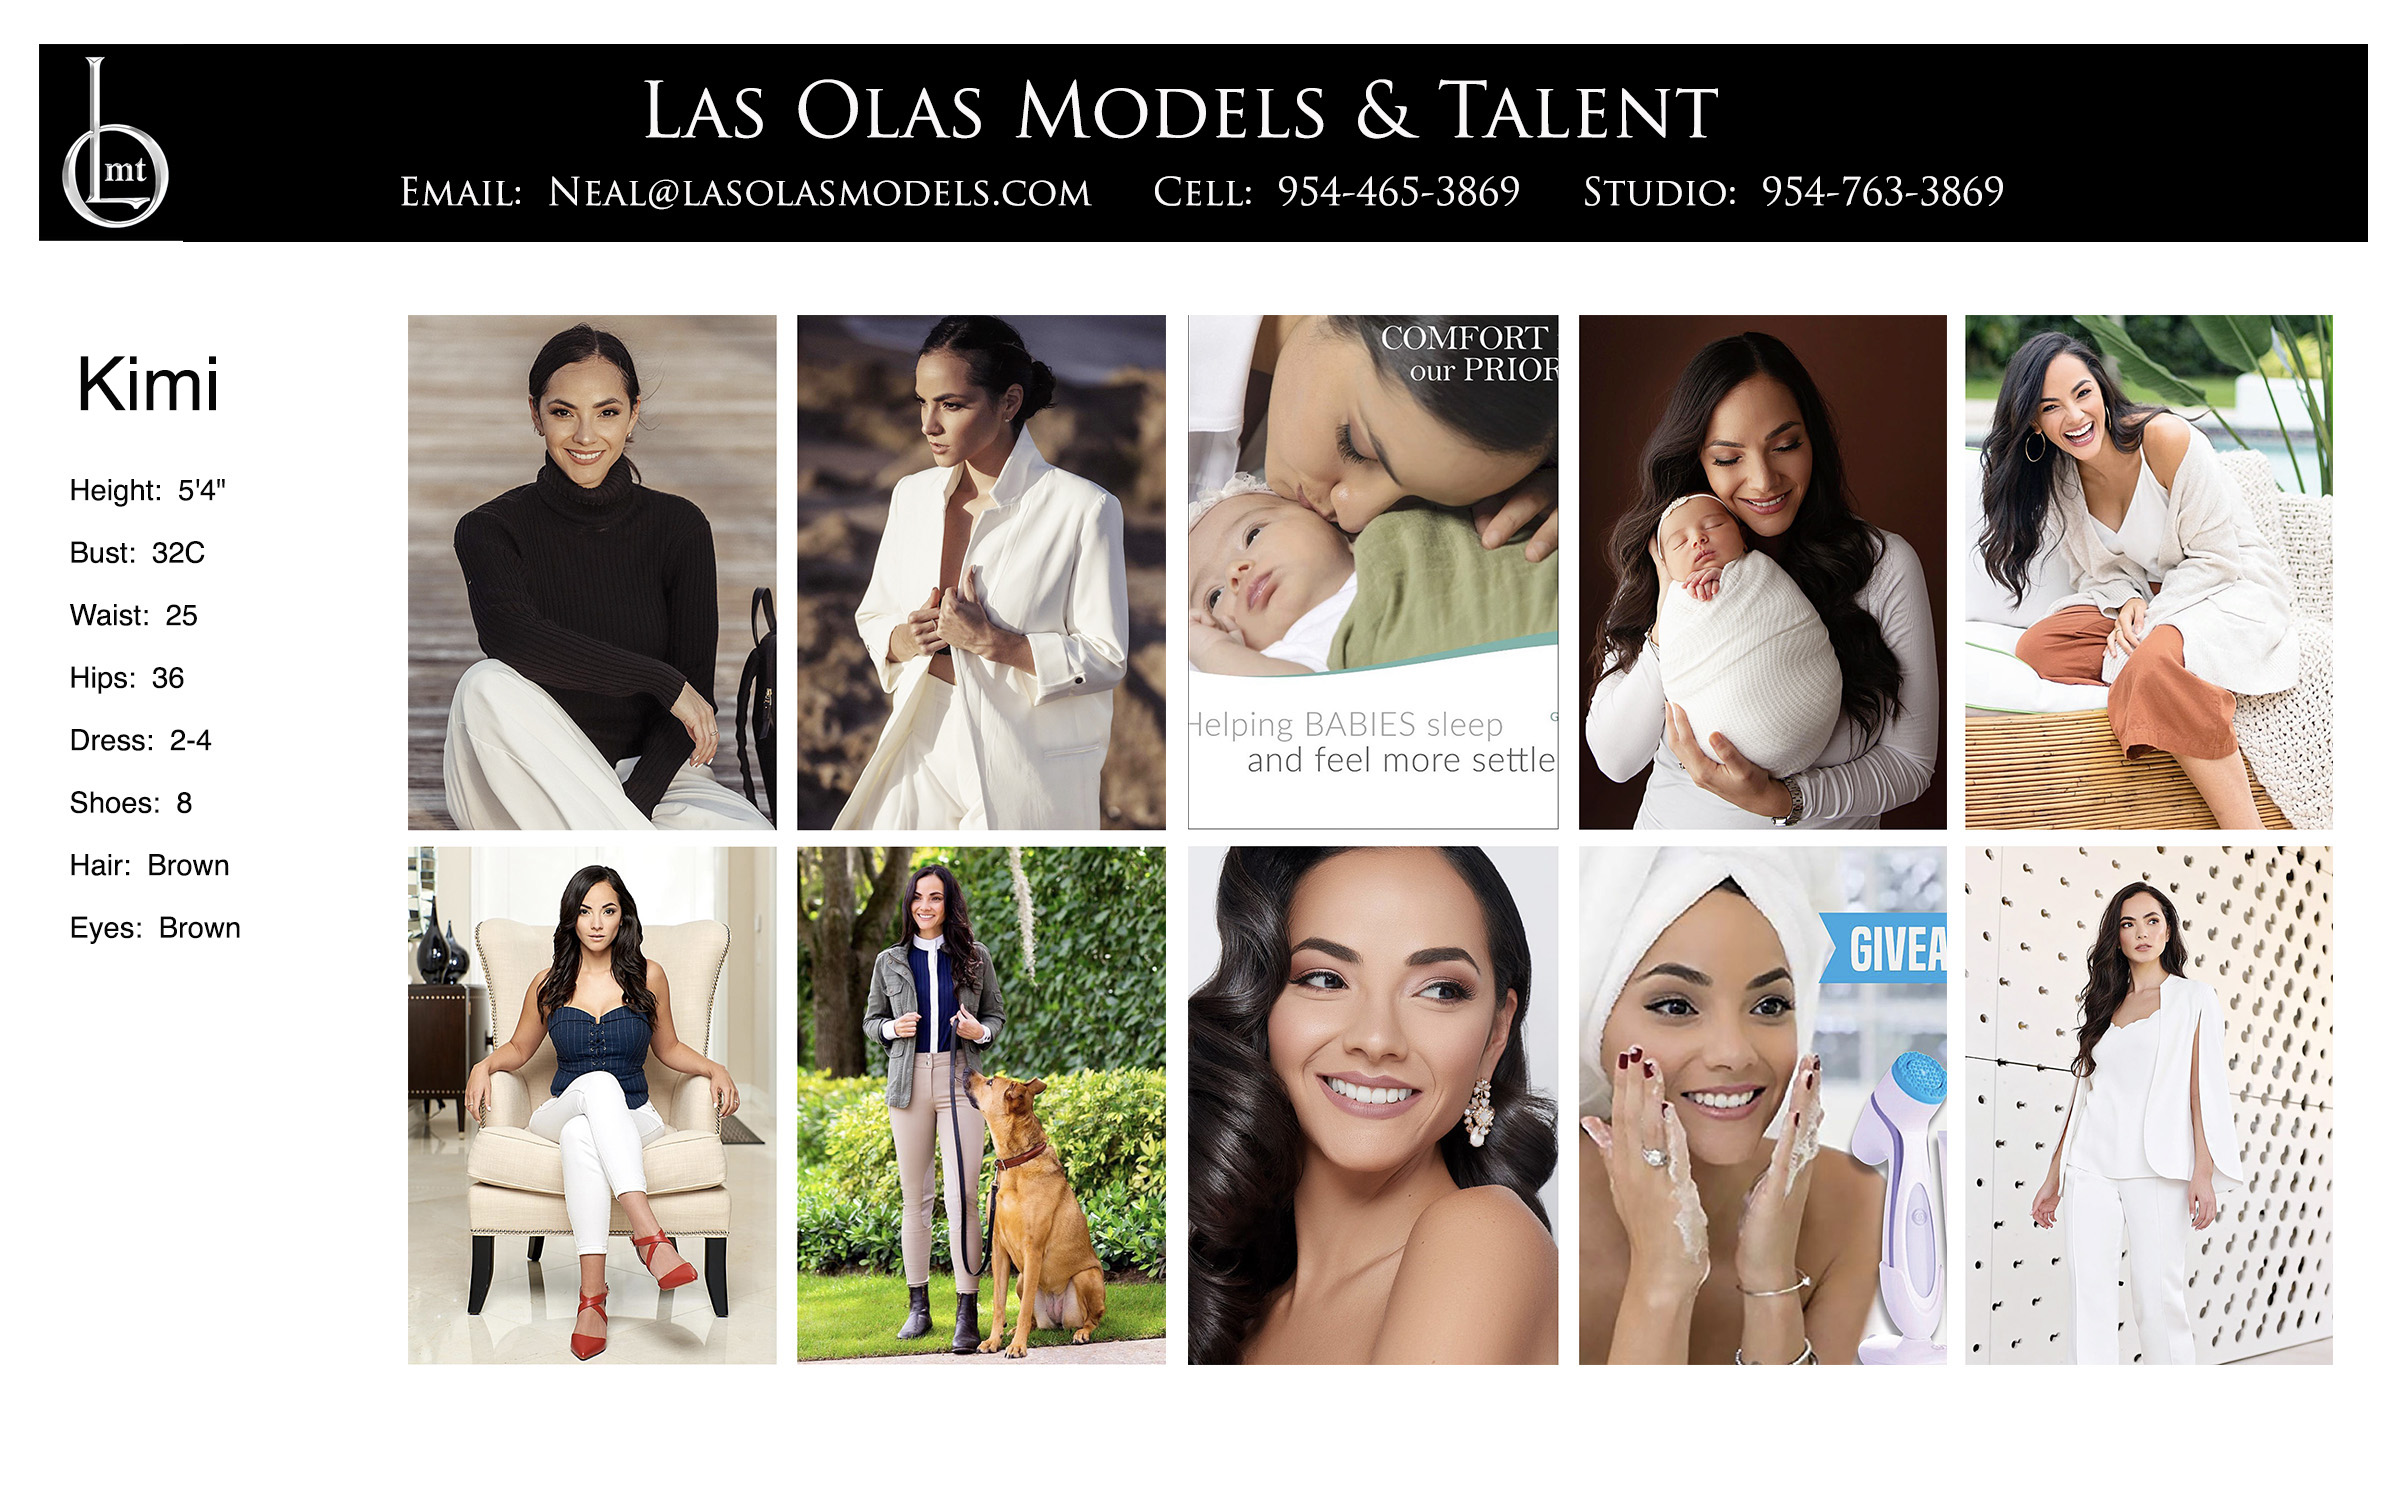 Models Fort Lauderdale Miami South Florida - Print Video Commercial Catalog - Las Olas Models & Talent- Kimi Comp